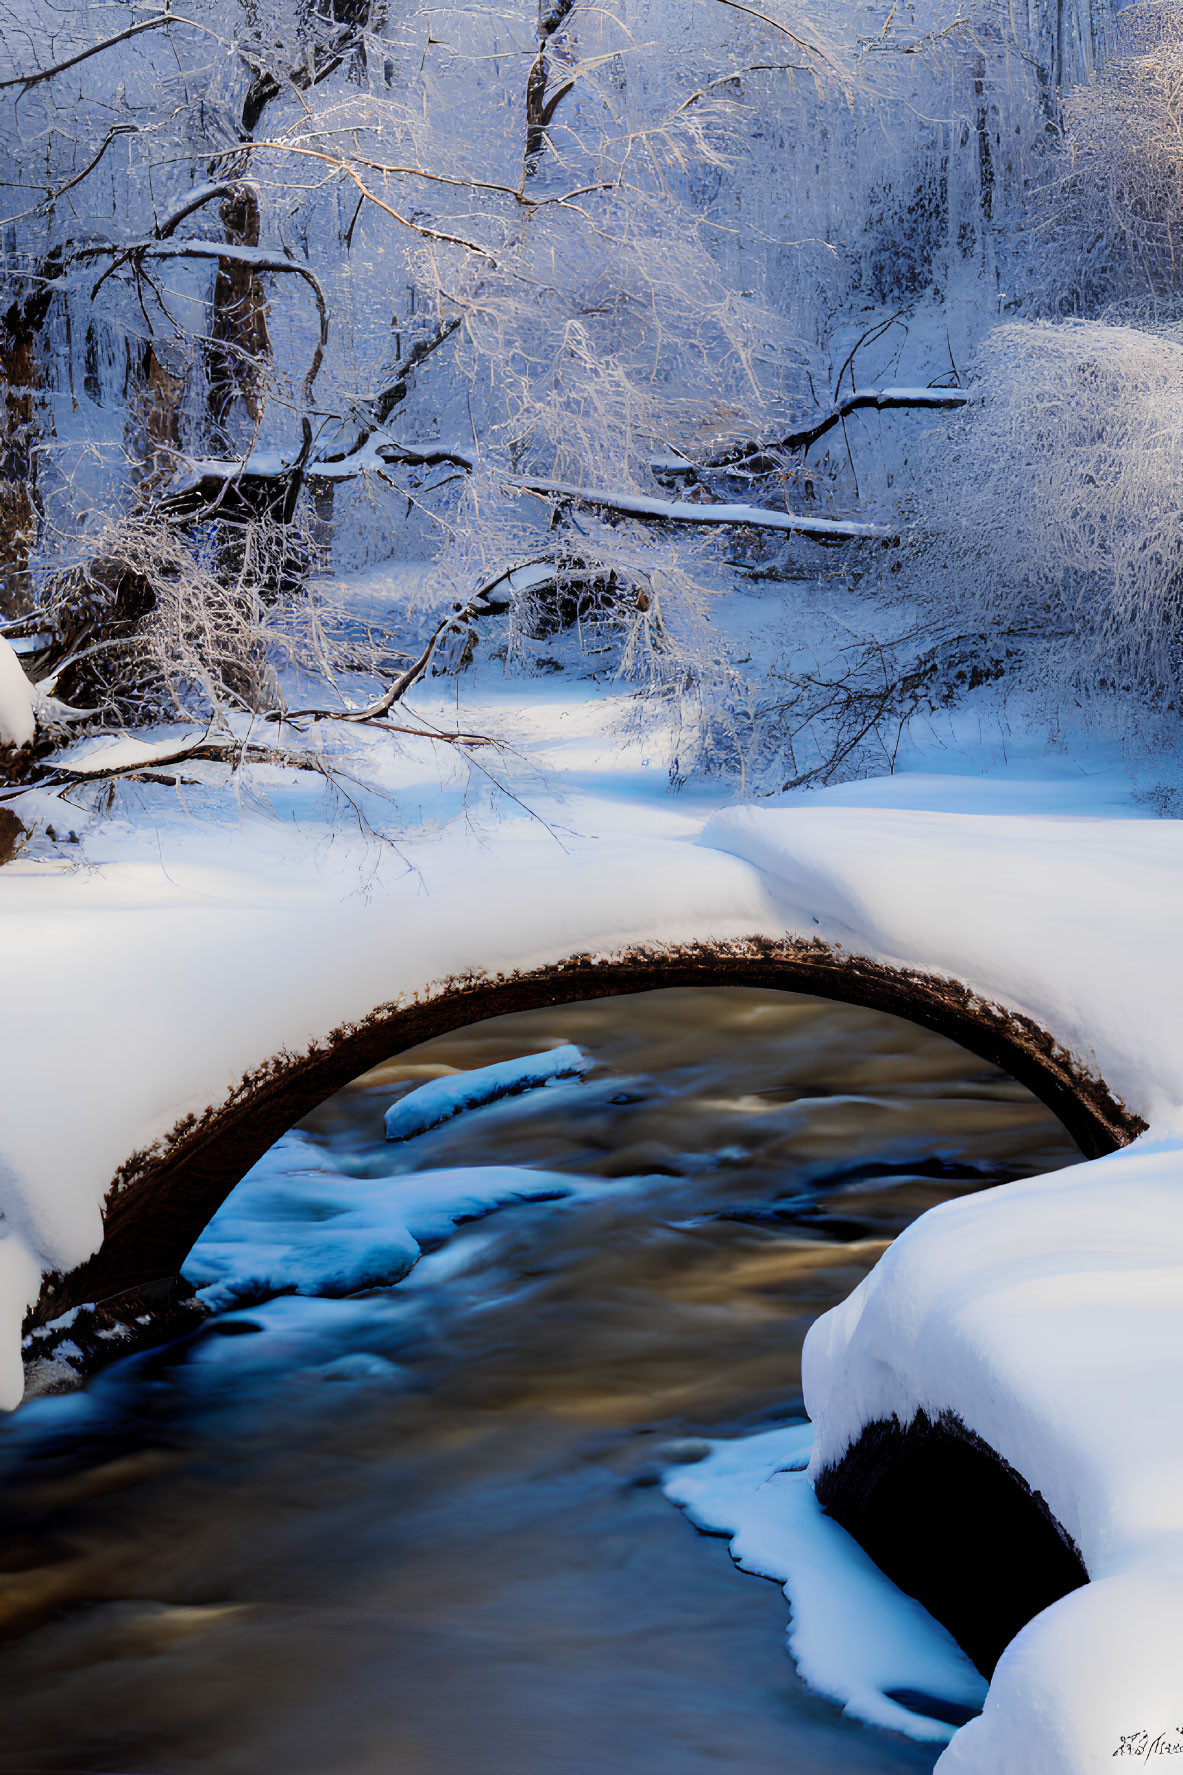 Snow-covered stone bridge over flowing creek in serene winter landscape